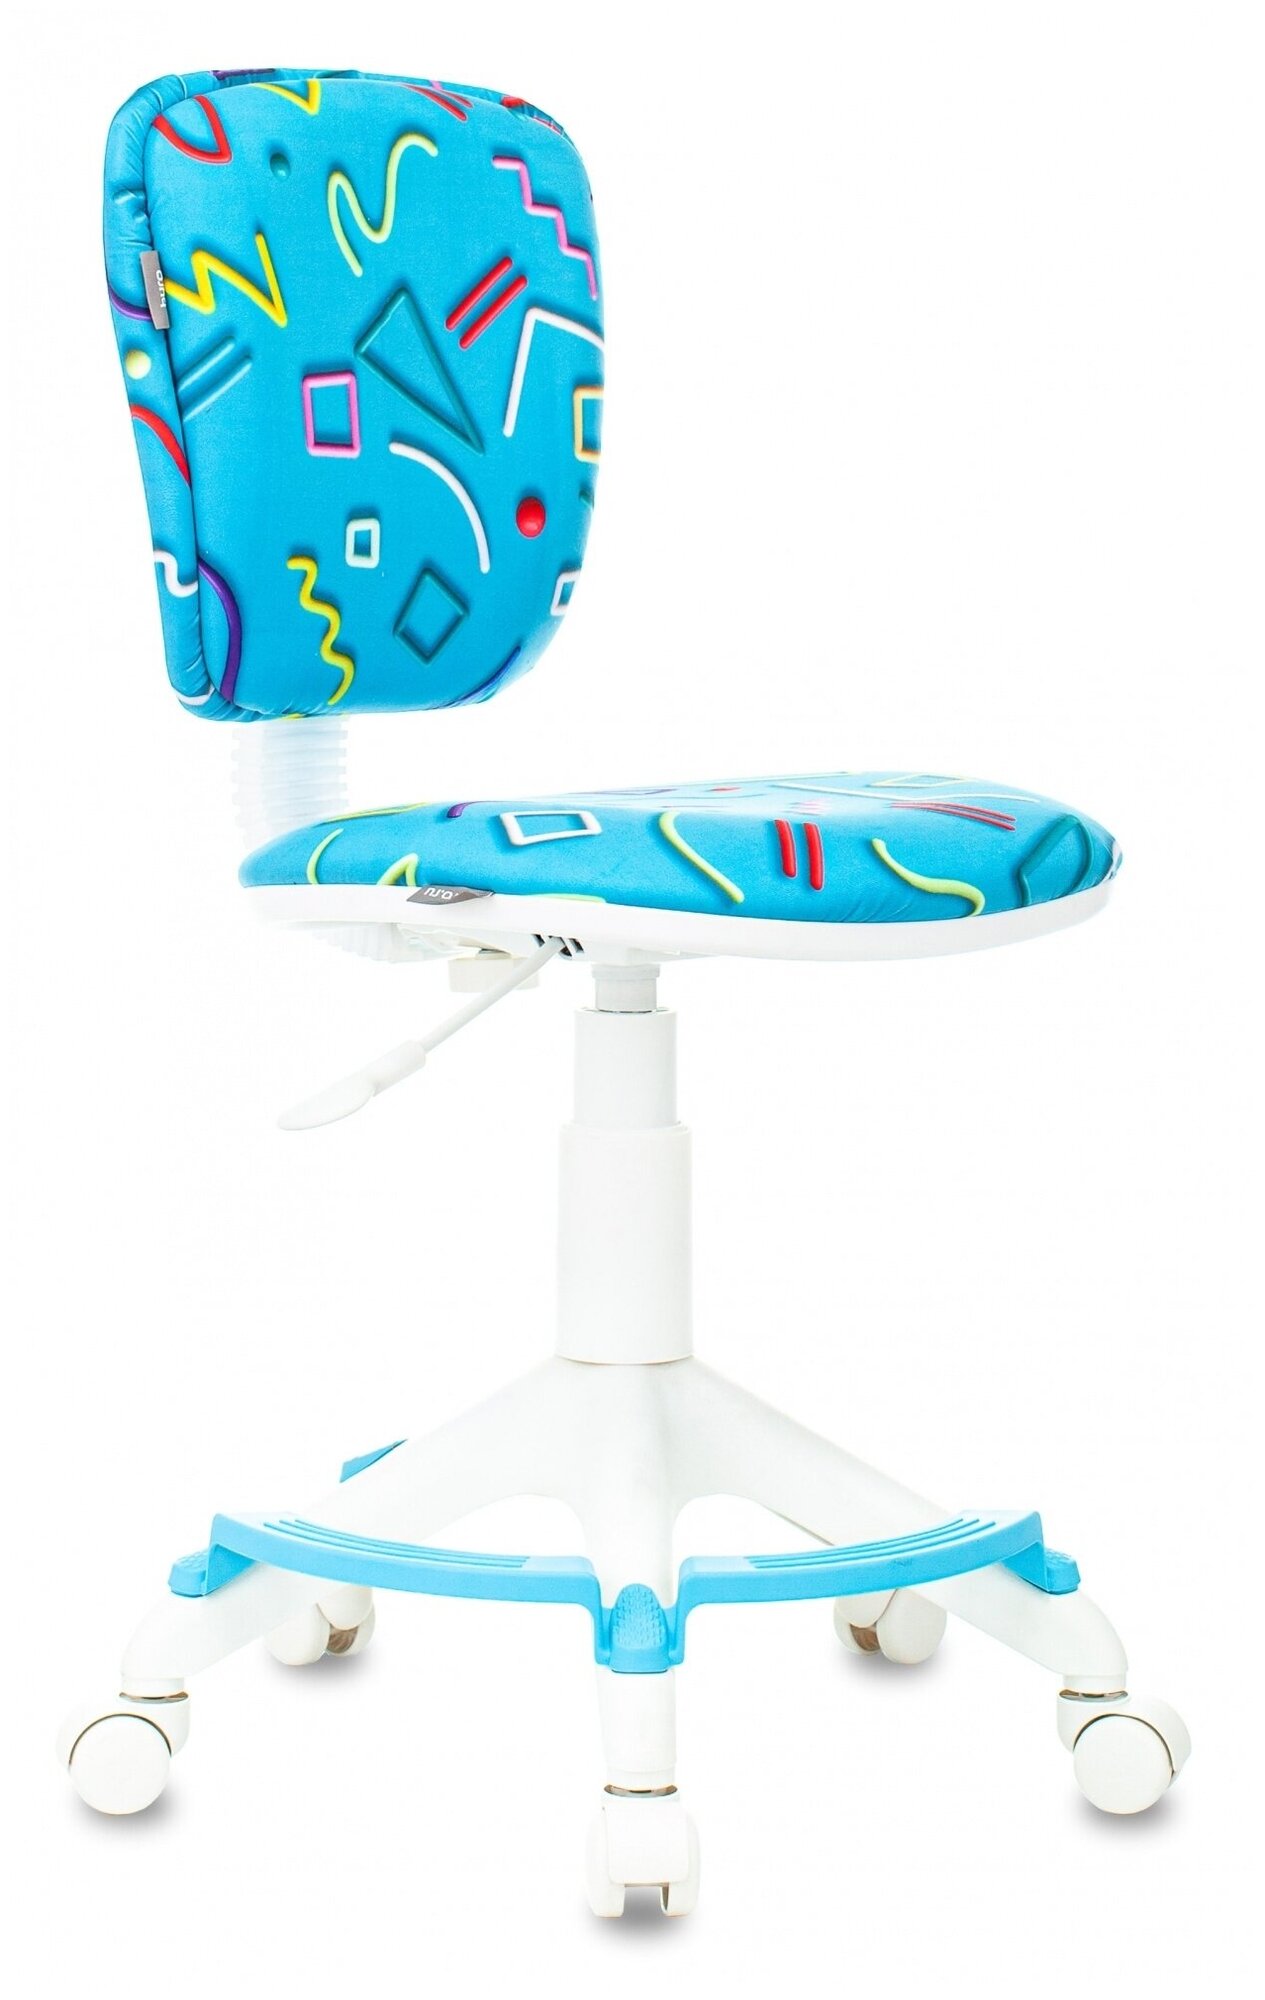 Кресло детское CH-W204/F голубой Sticks 06 крестовина пластик подст.для ног пластик белый CH-W204/F/STICK-BL - фотография № 1